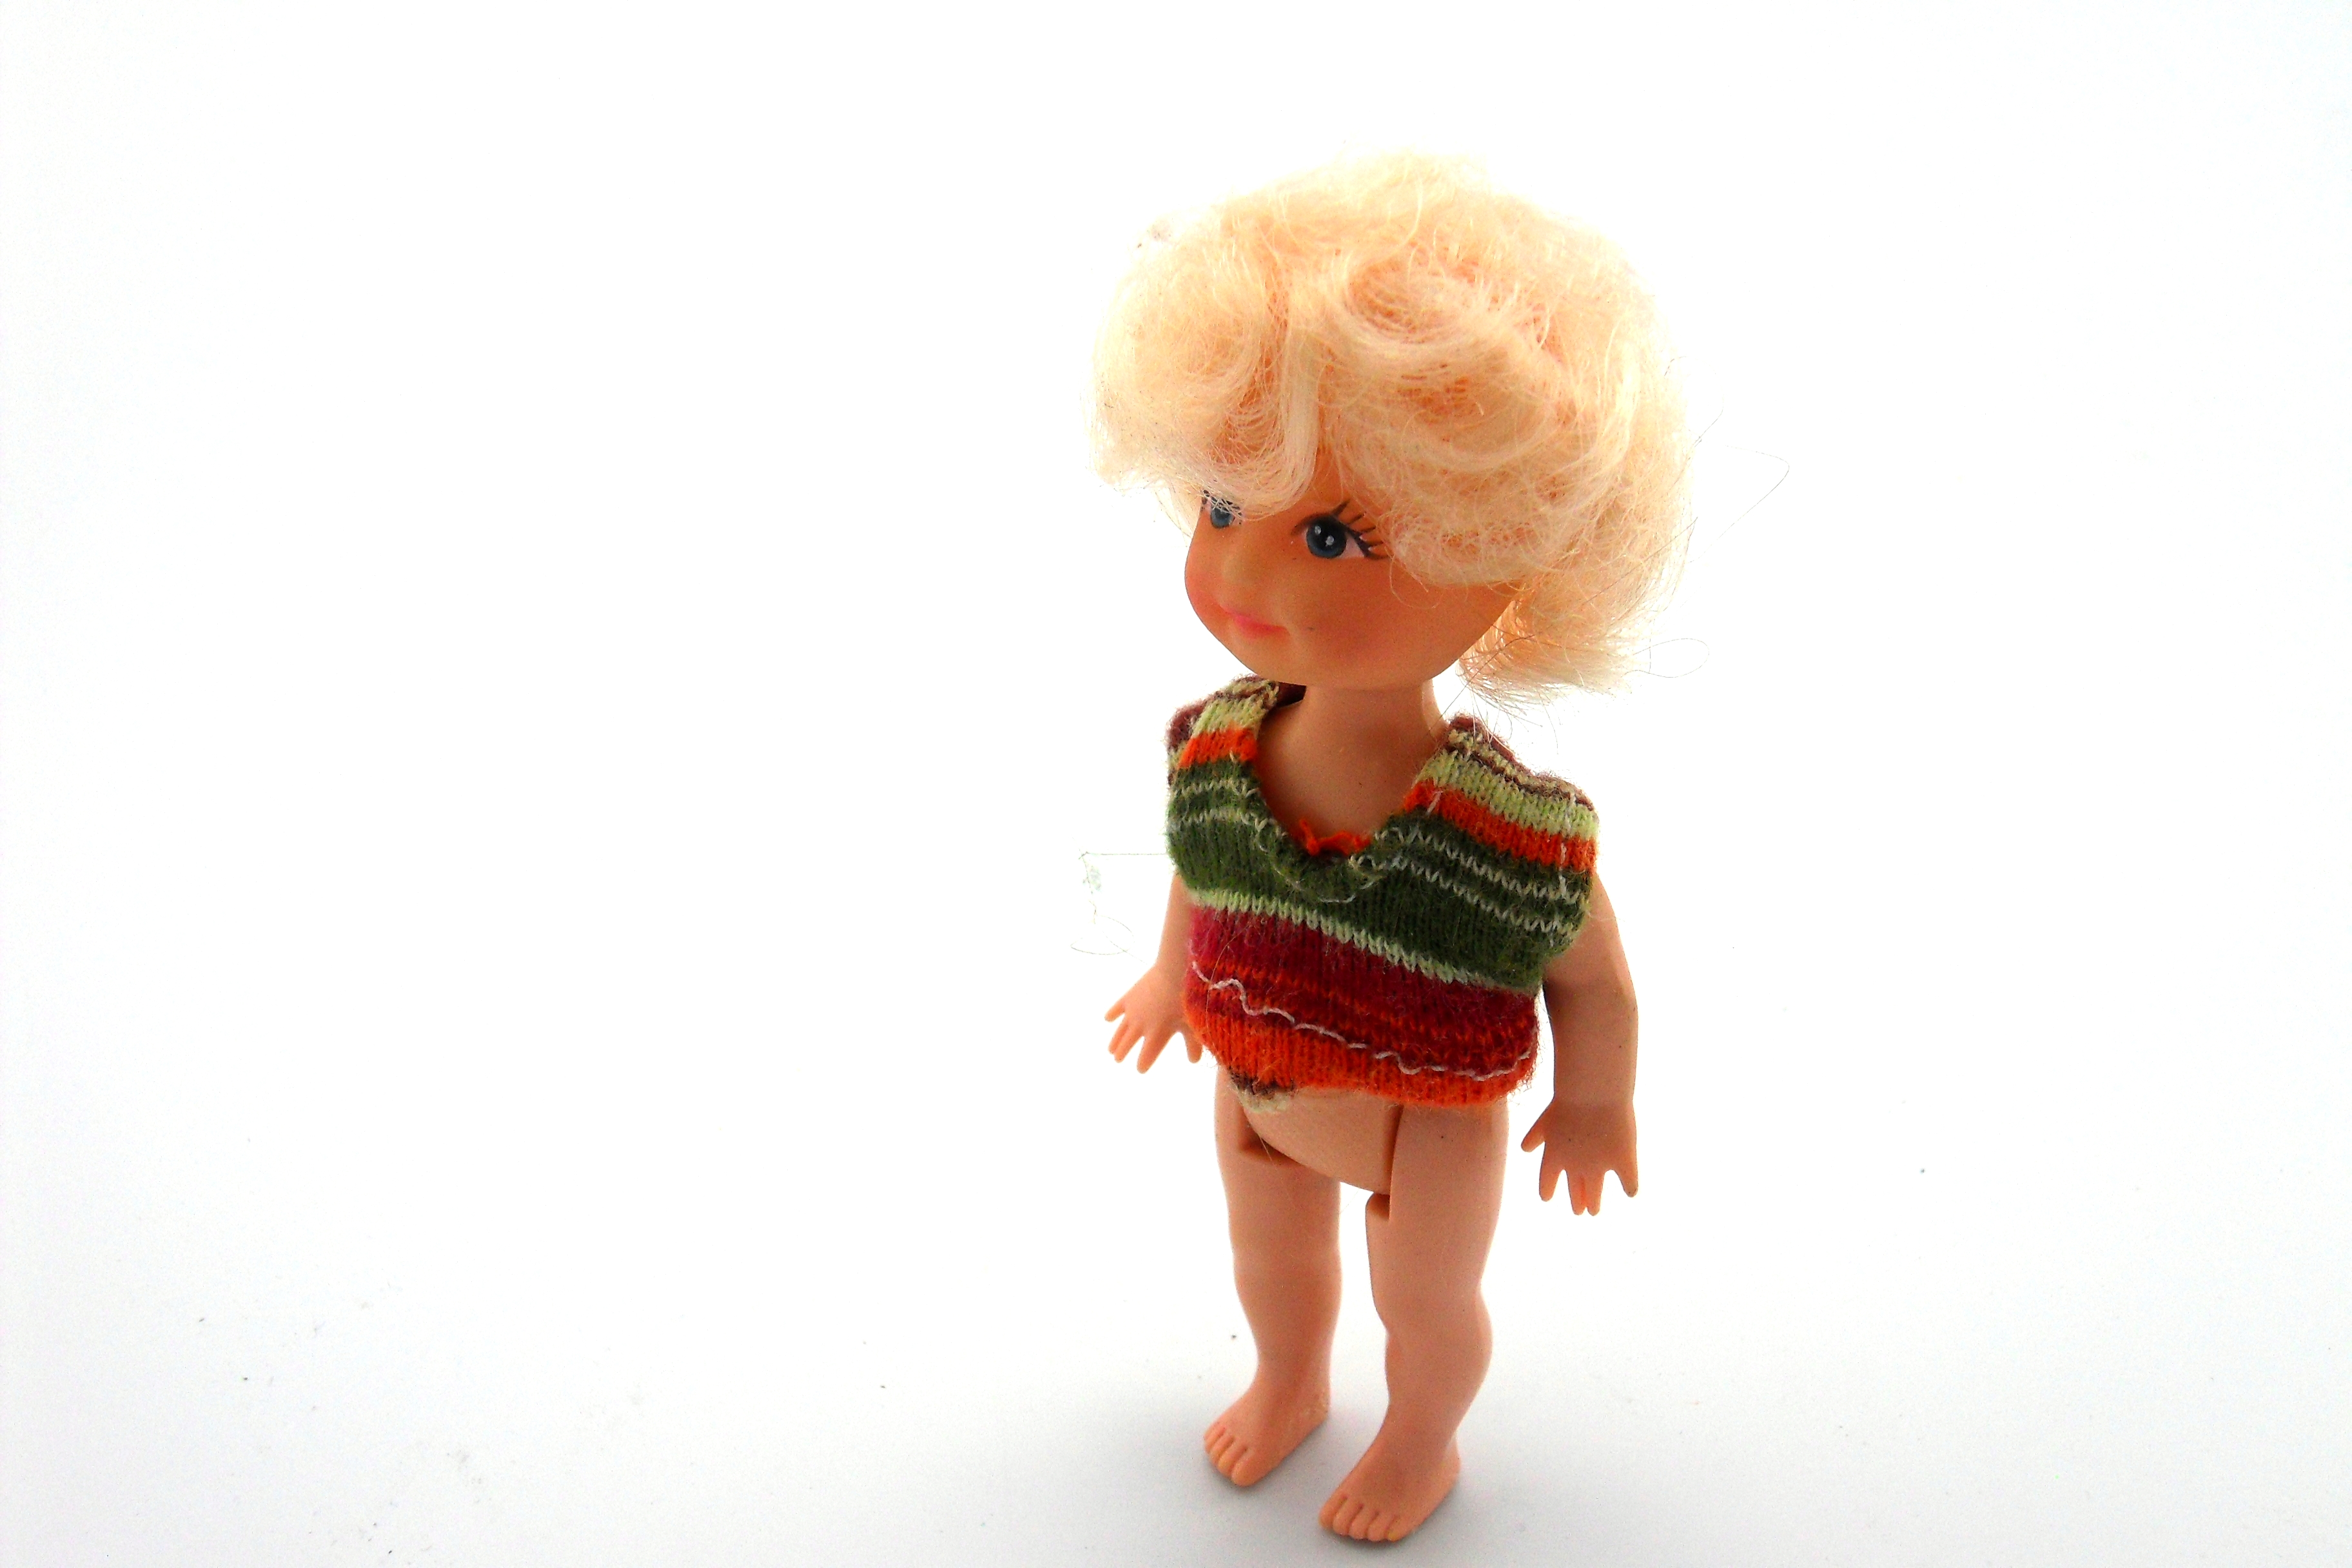 Plastic doll figure photo